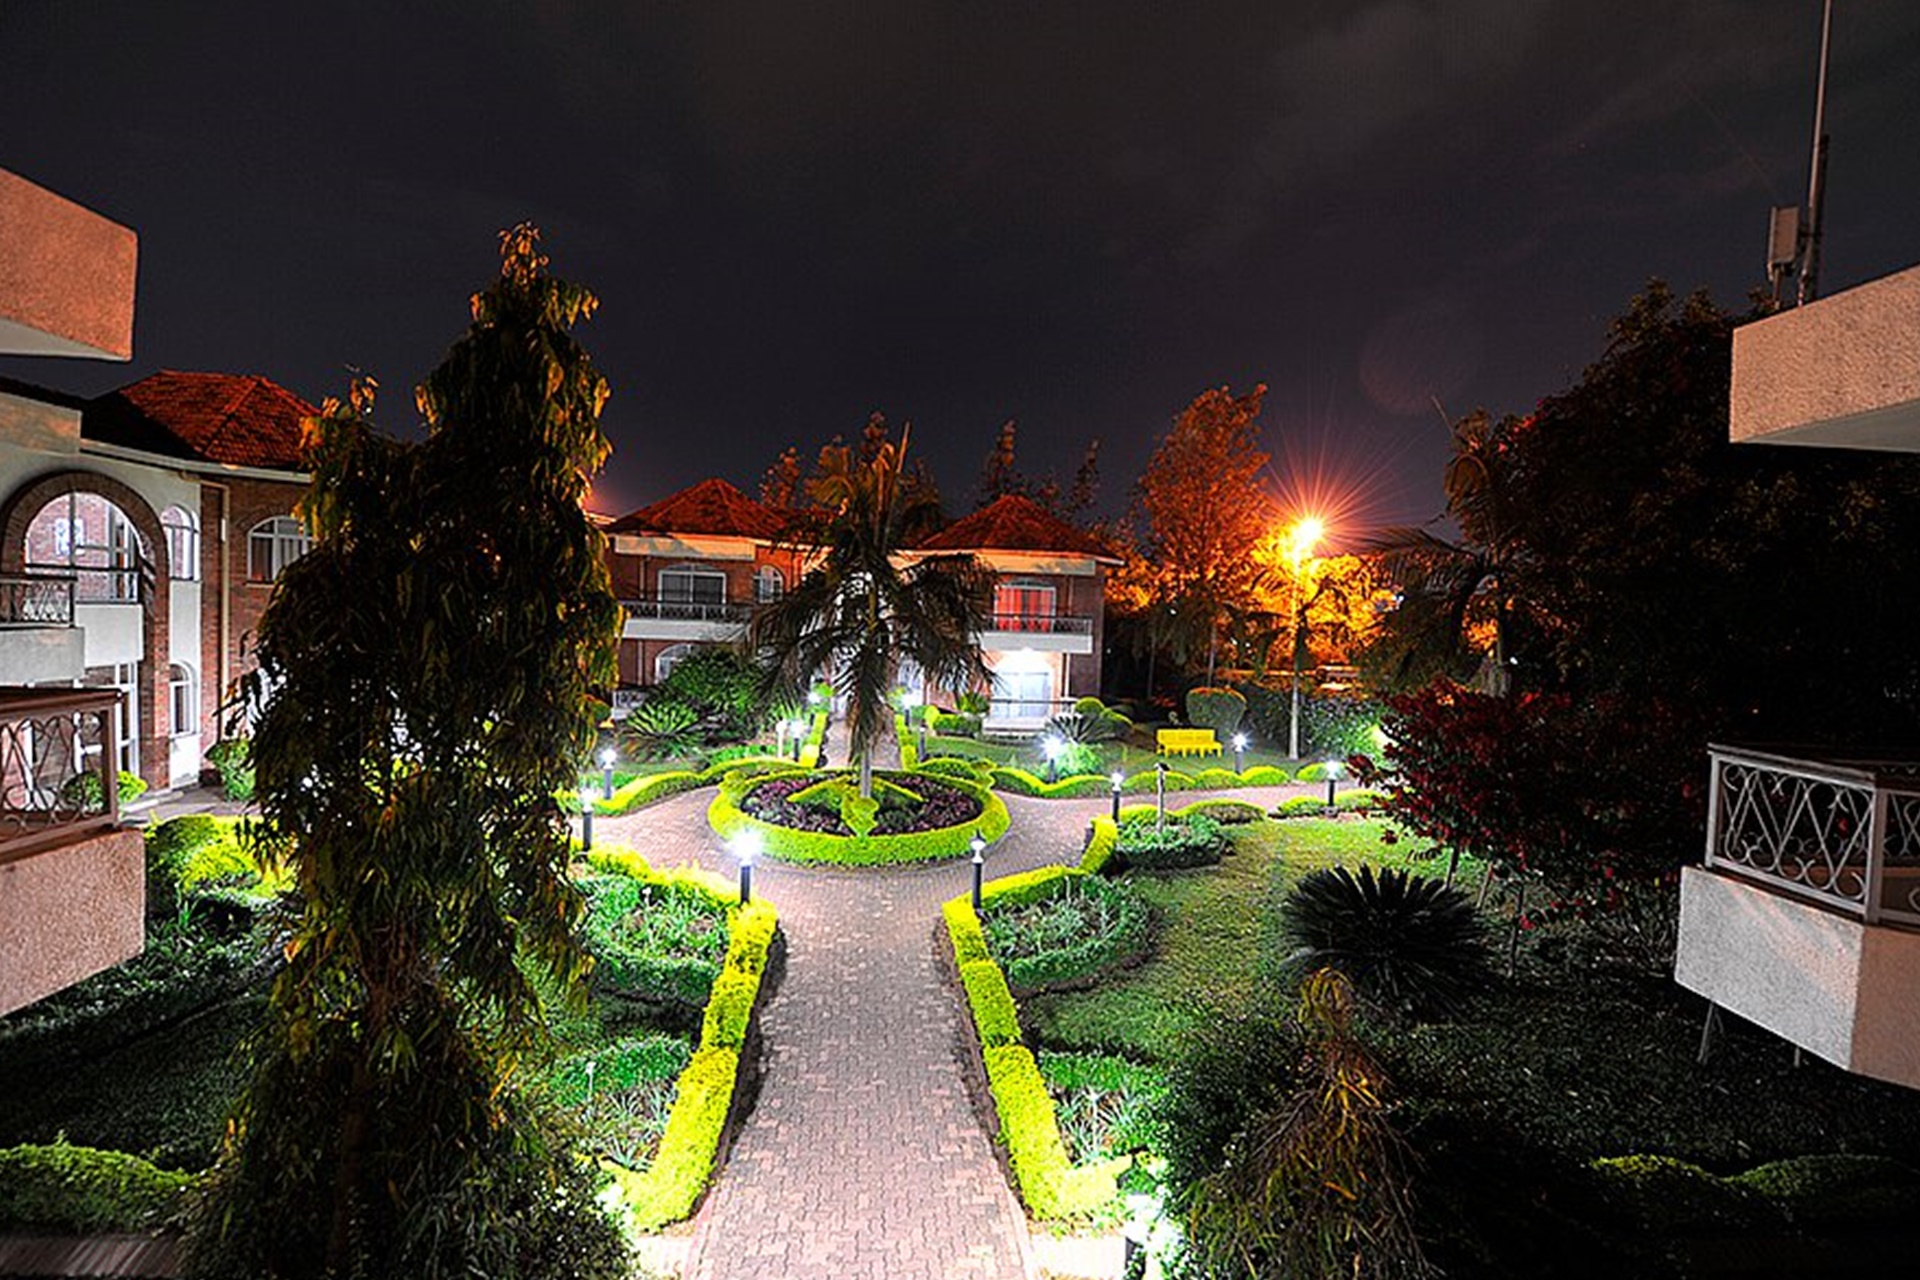 Chez Lando Hotel Kigali - Accommodation in Kigali city